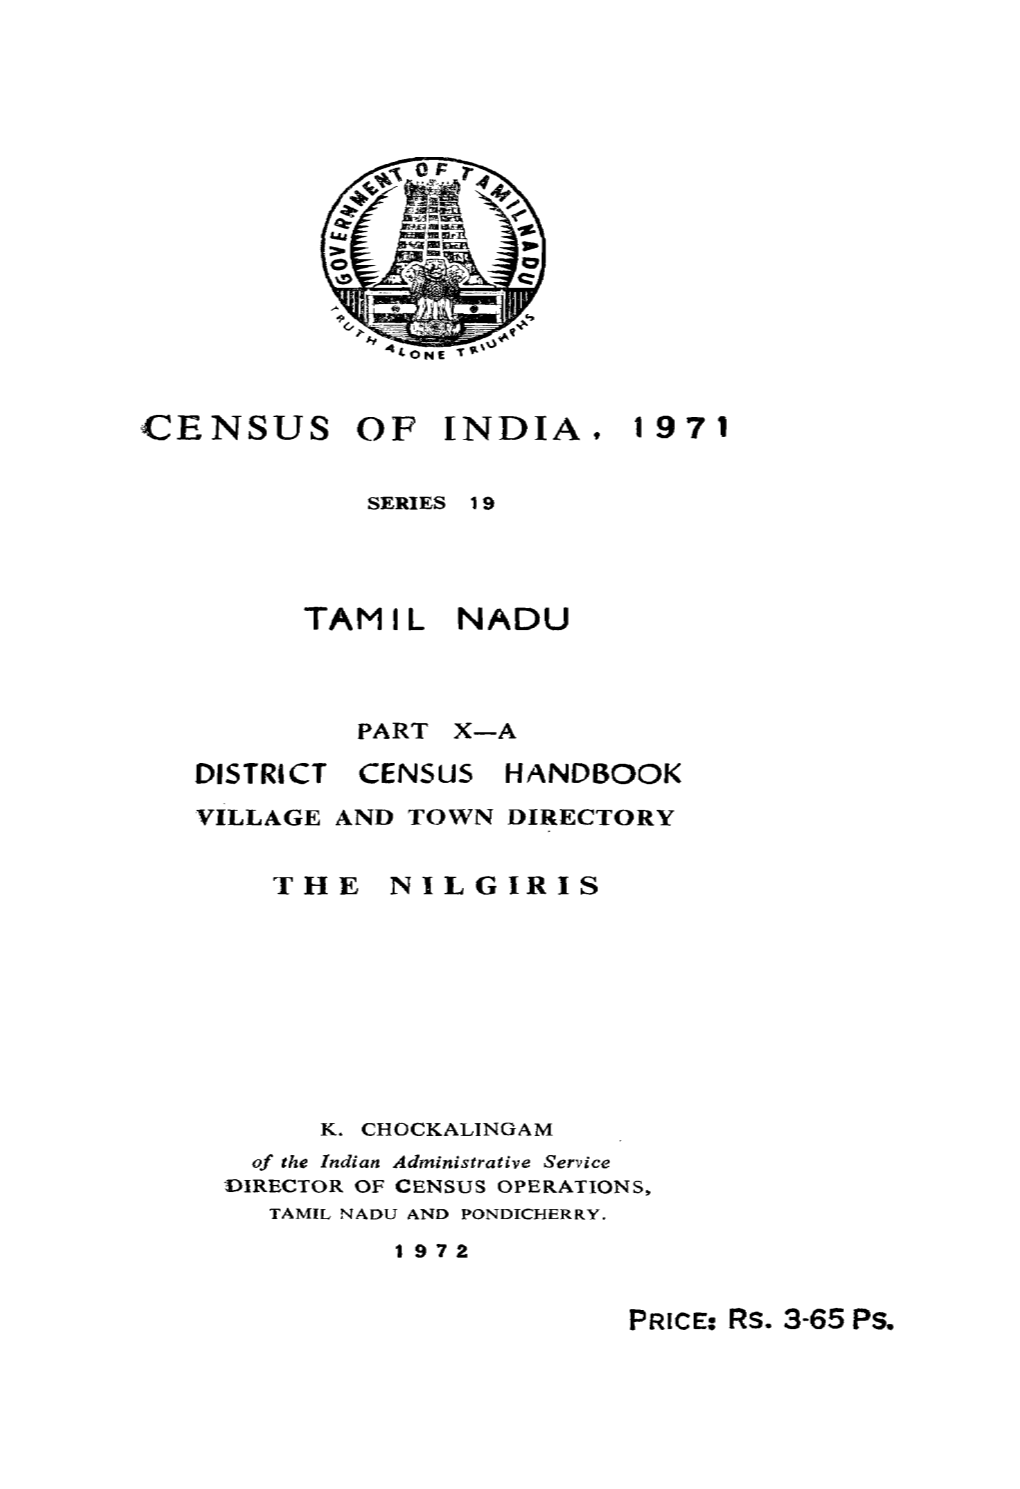 District Census Handbook, the Nilgiris, Part X-A, Series-19